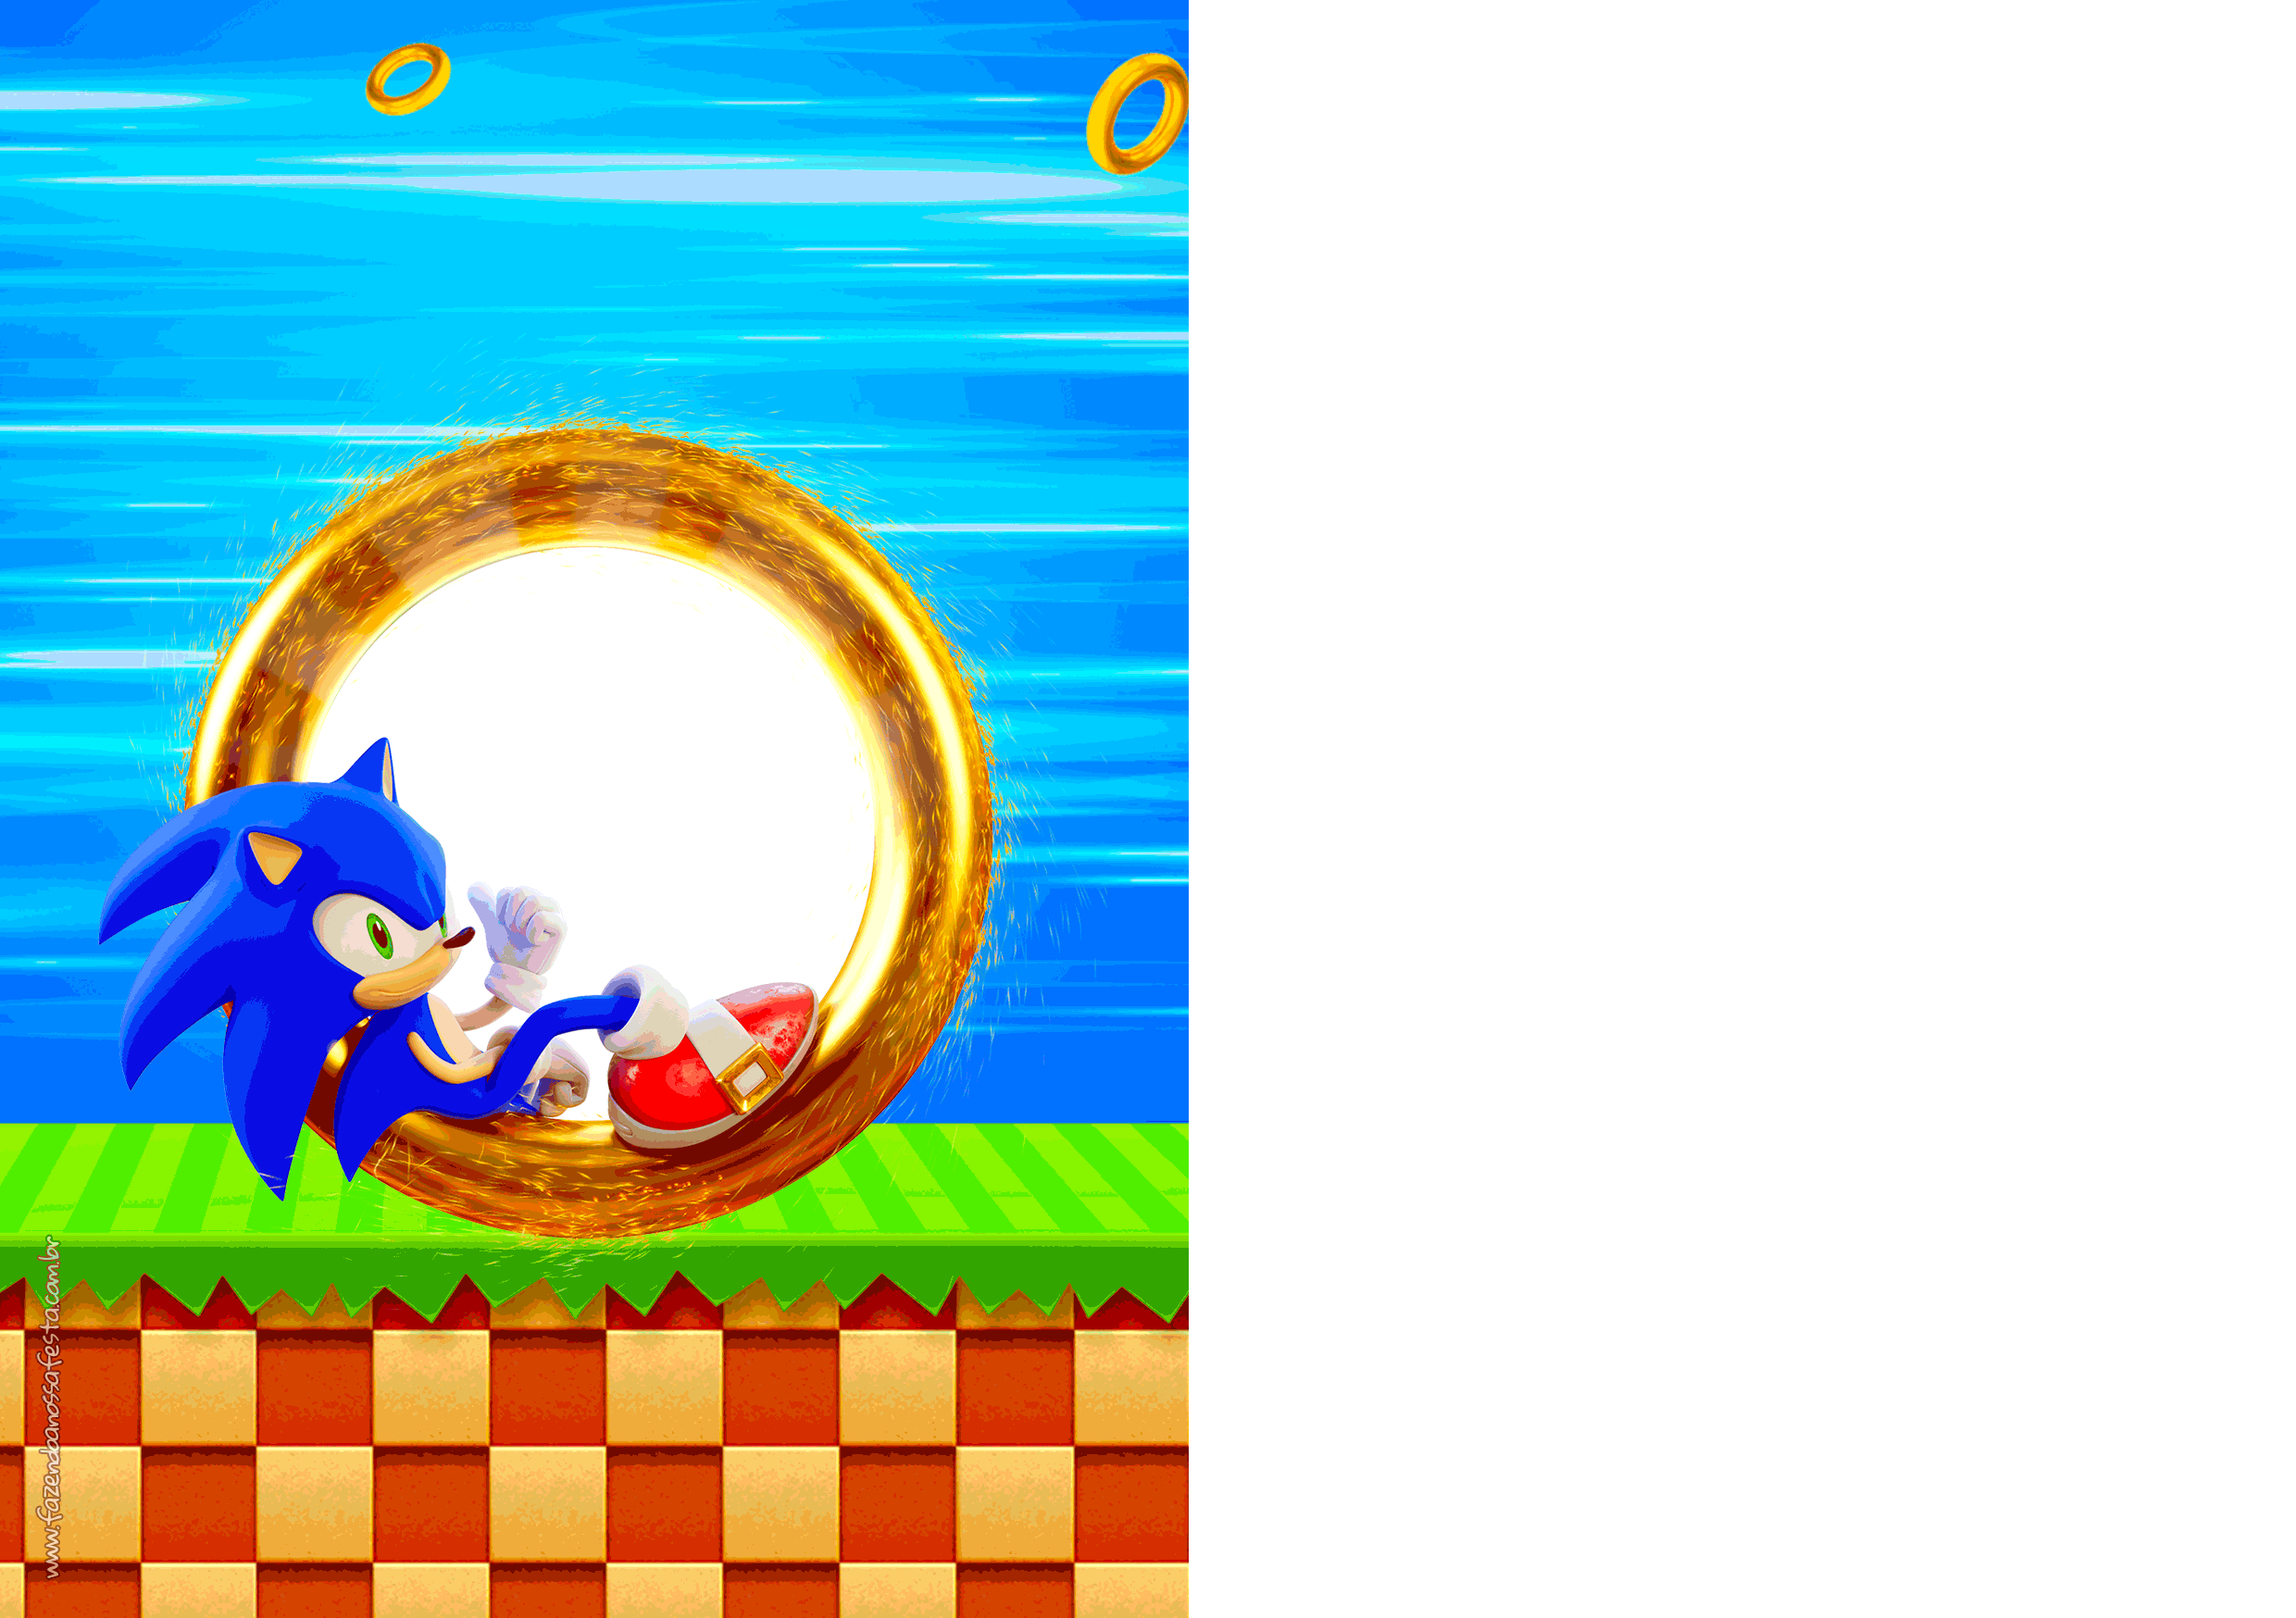 Convites Festa Sonic The Hedgehog